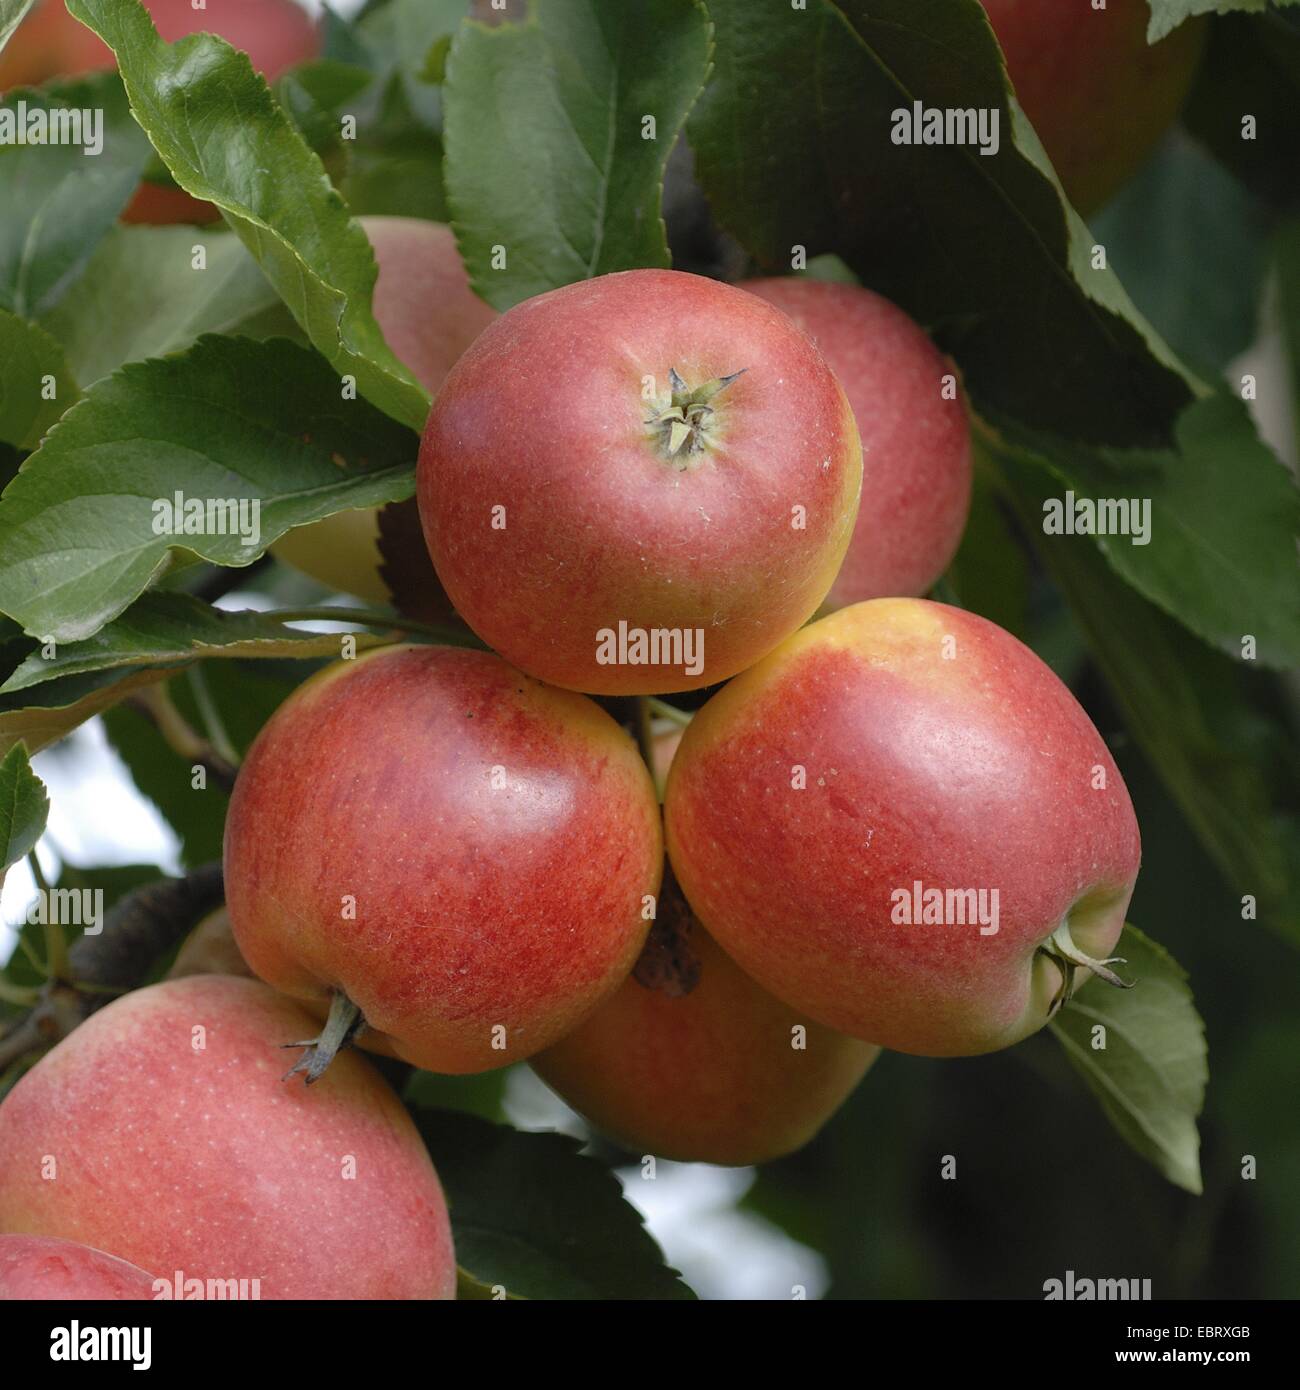 Apfelbaum (Malus Domestica "Gala", Malus Domestica Gala), Sorte Gala, Äpfel auf dem Baum Stockfoto